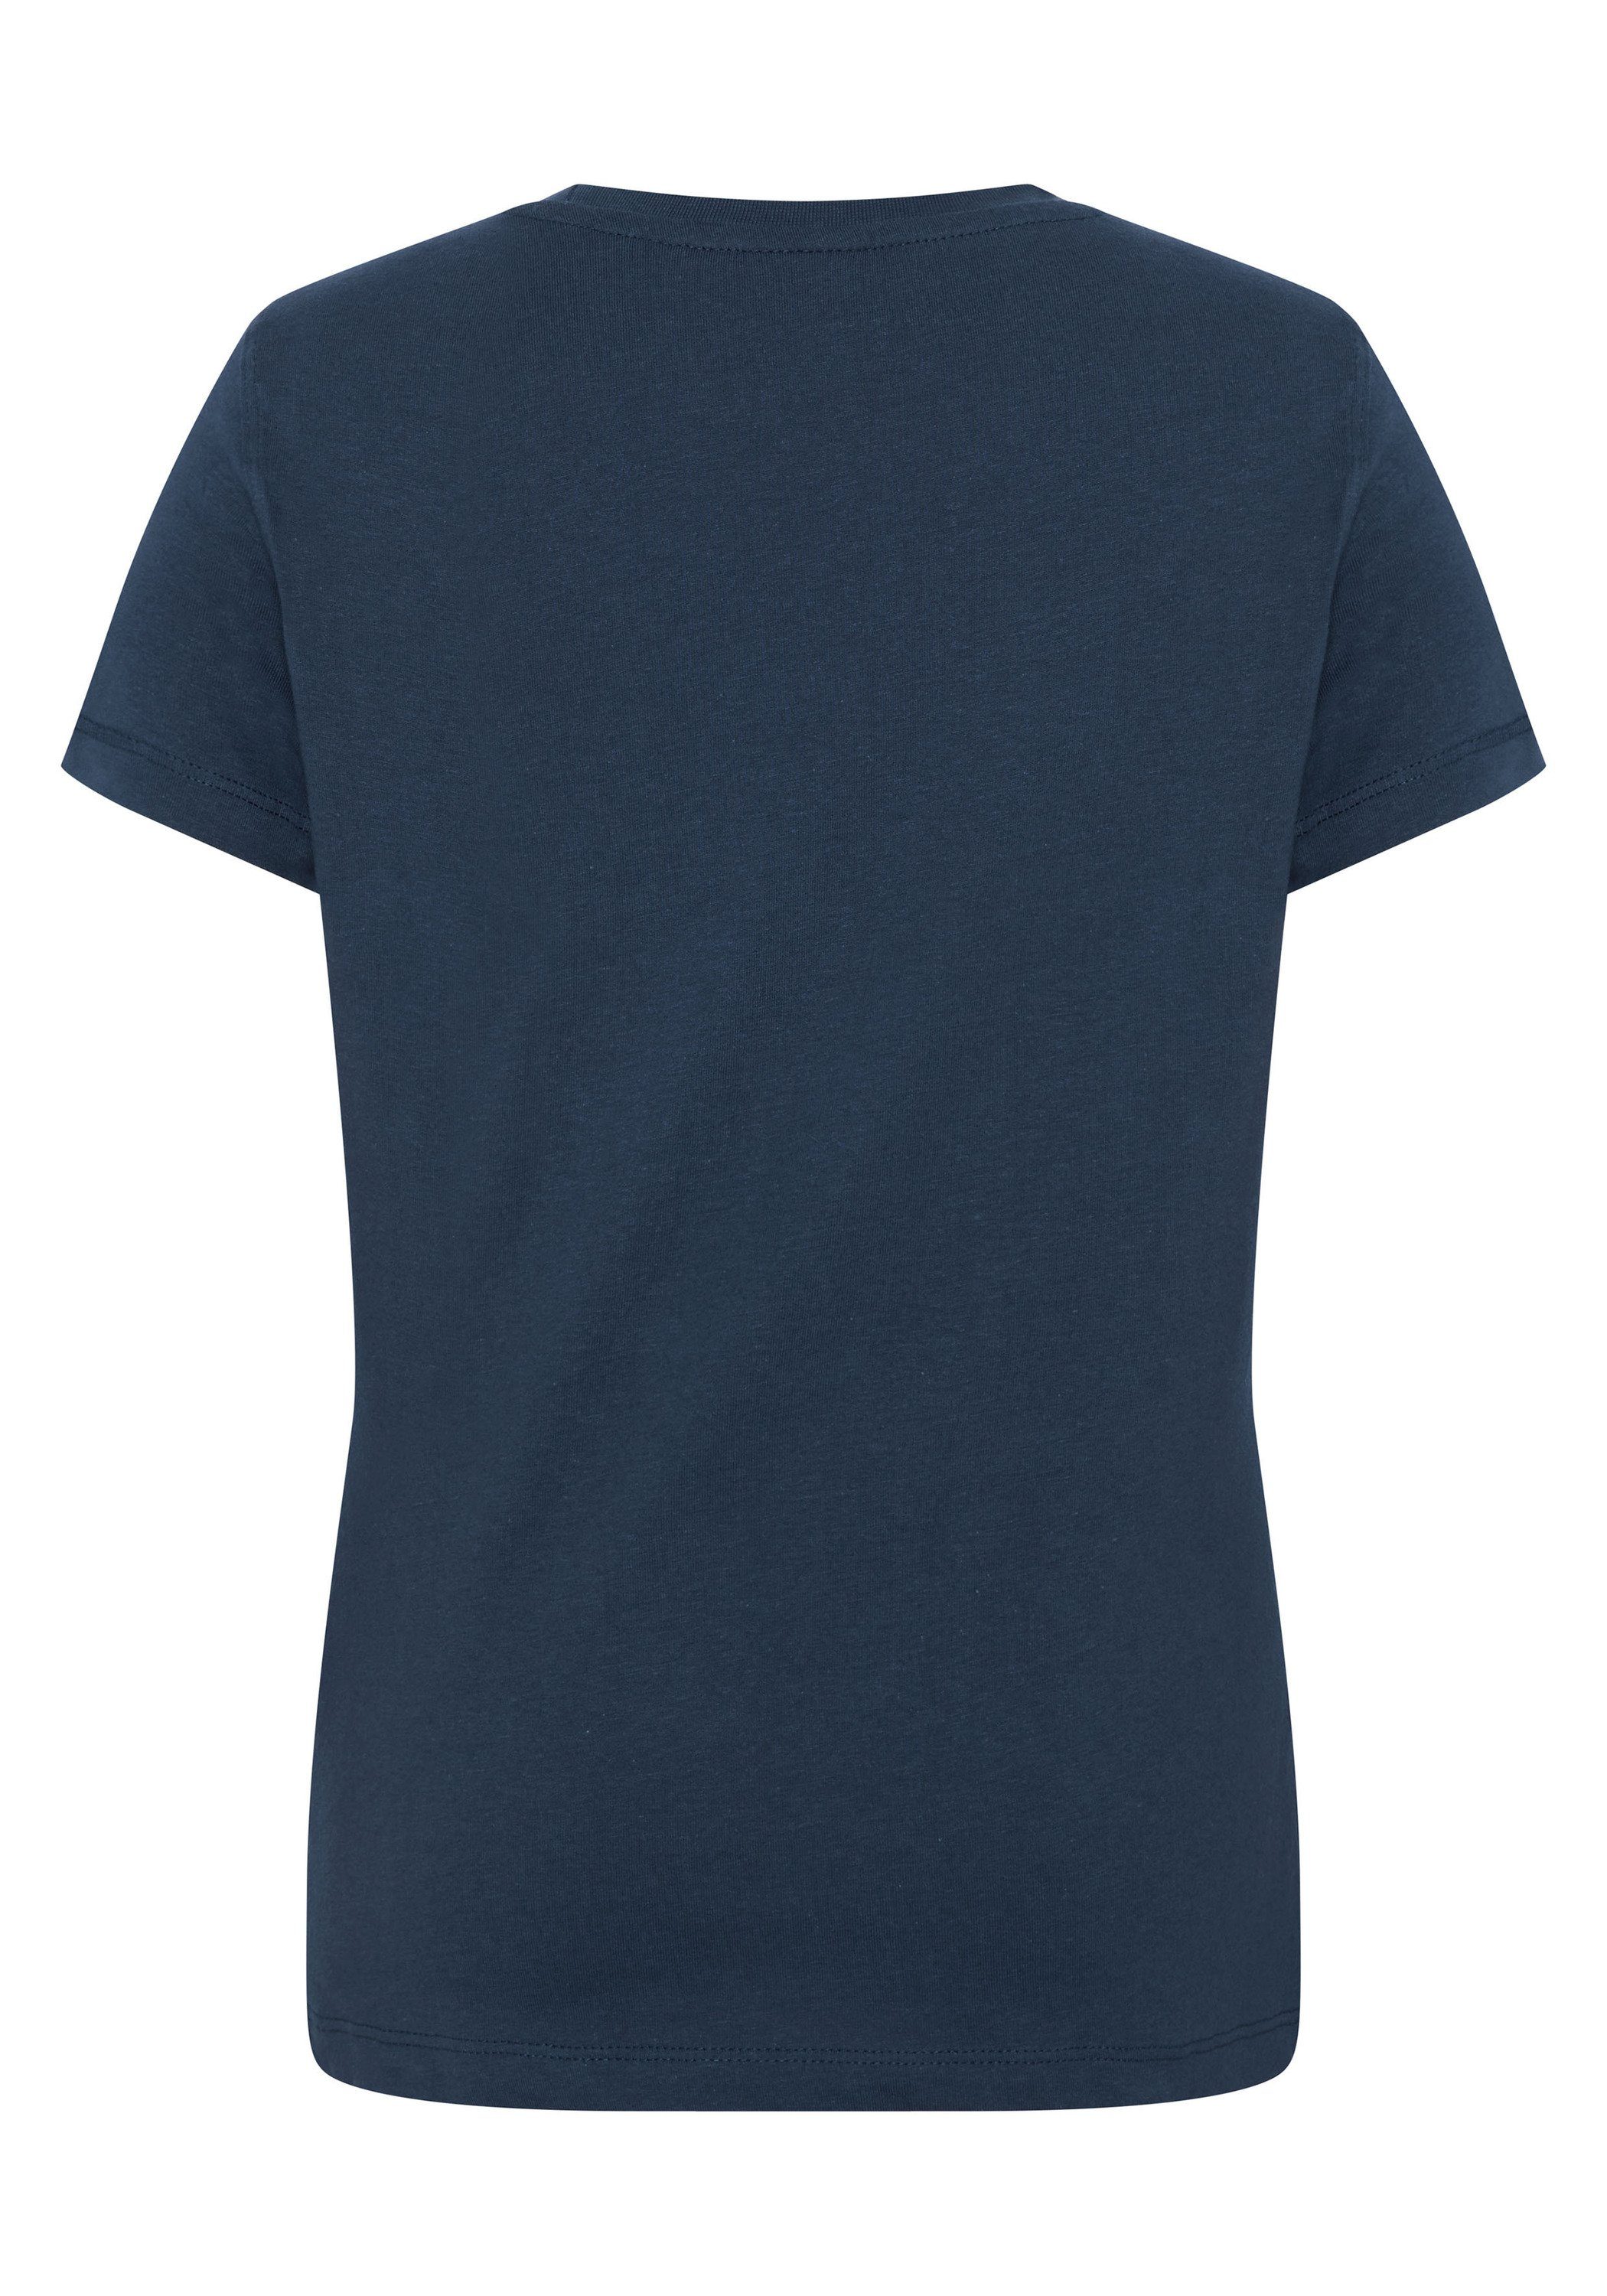 Jersey Polo Sylt aus weichem Total 19-4010 Print-Shirt Eclipse